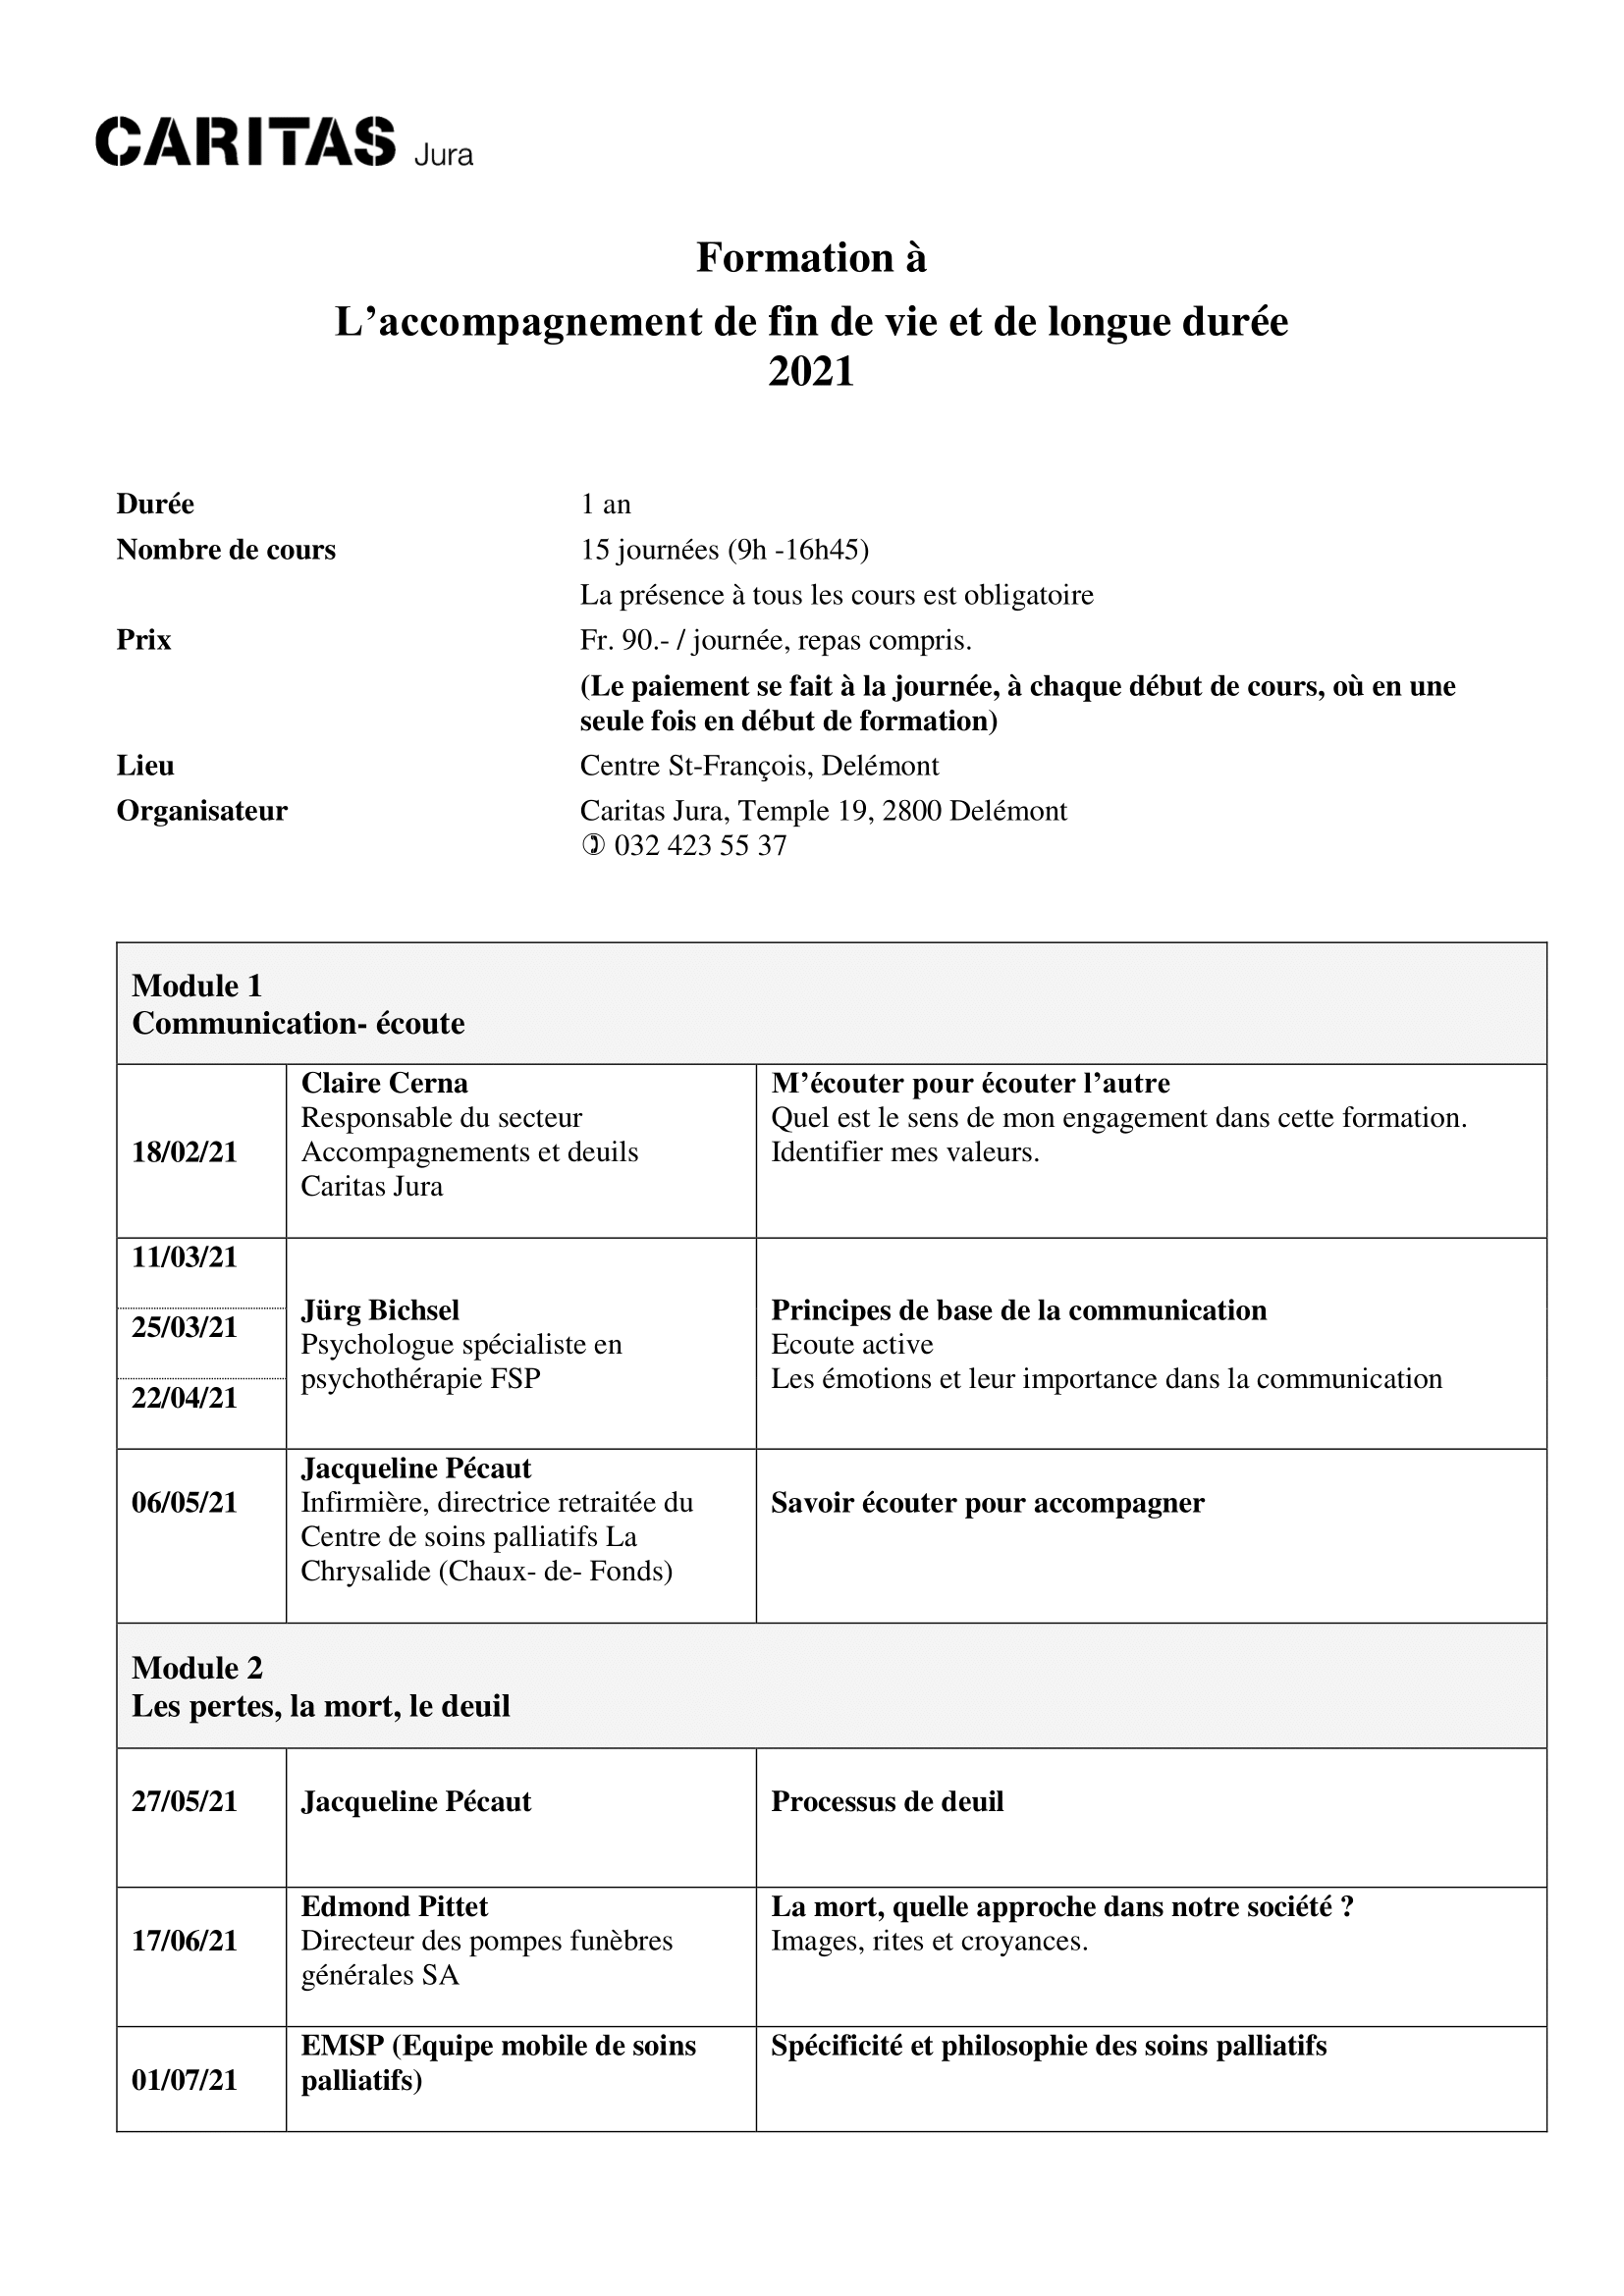 Formation APFV 2021 programme 1